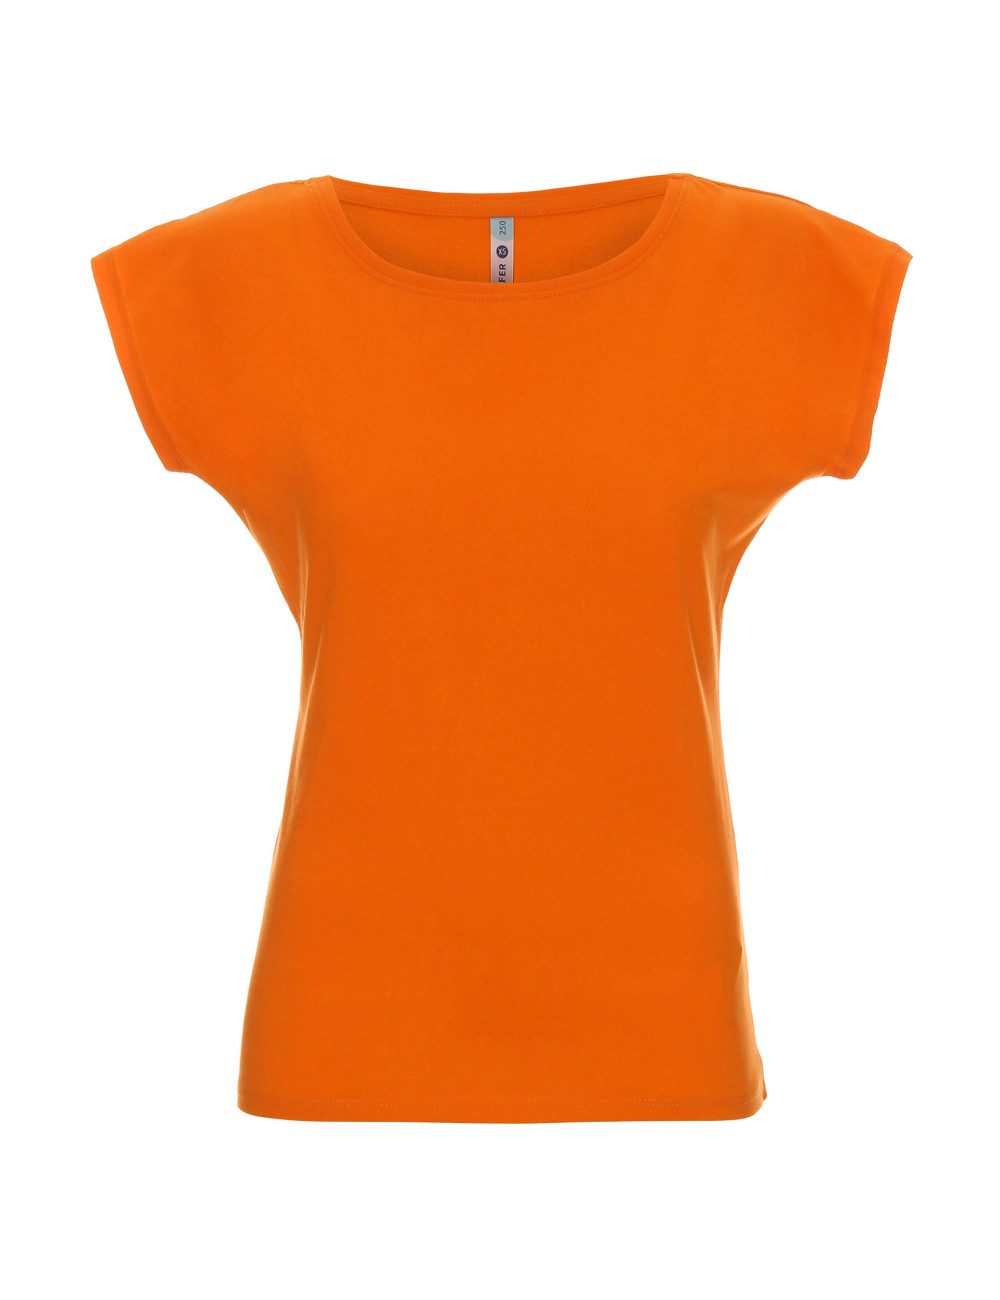 T-shirt women 250 orange Geffer